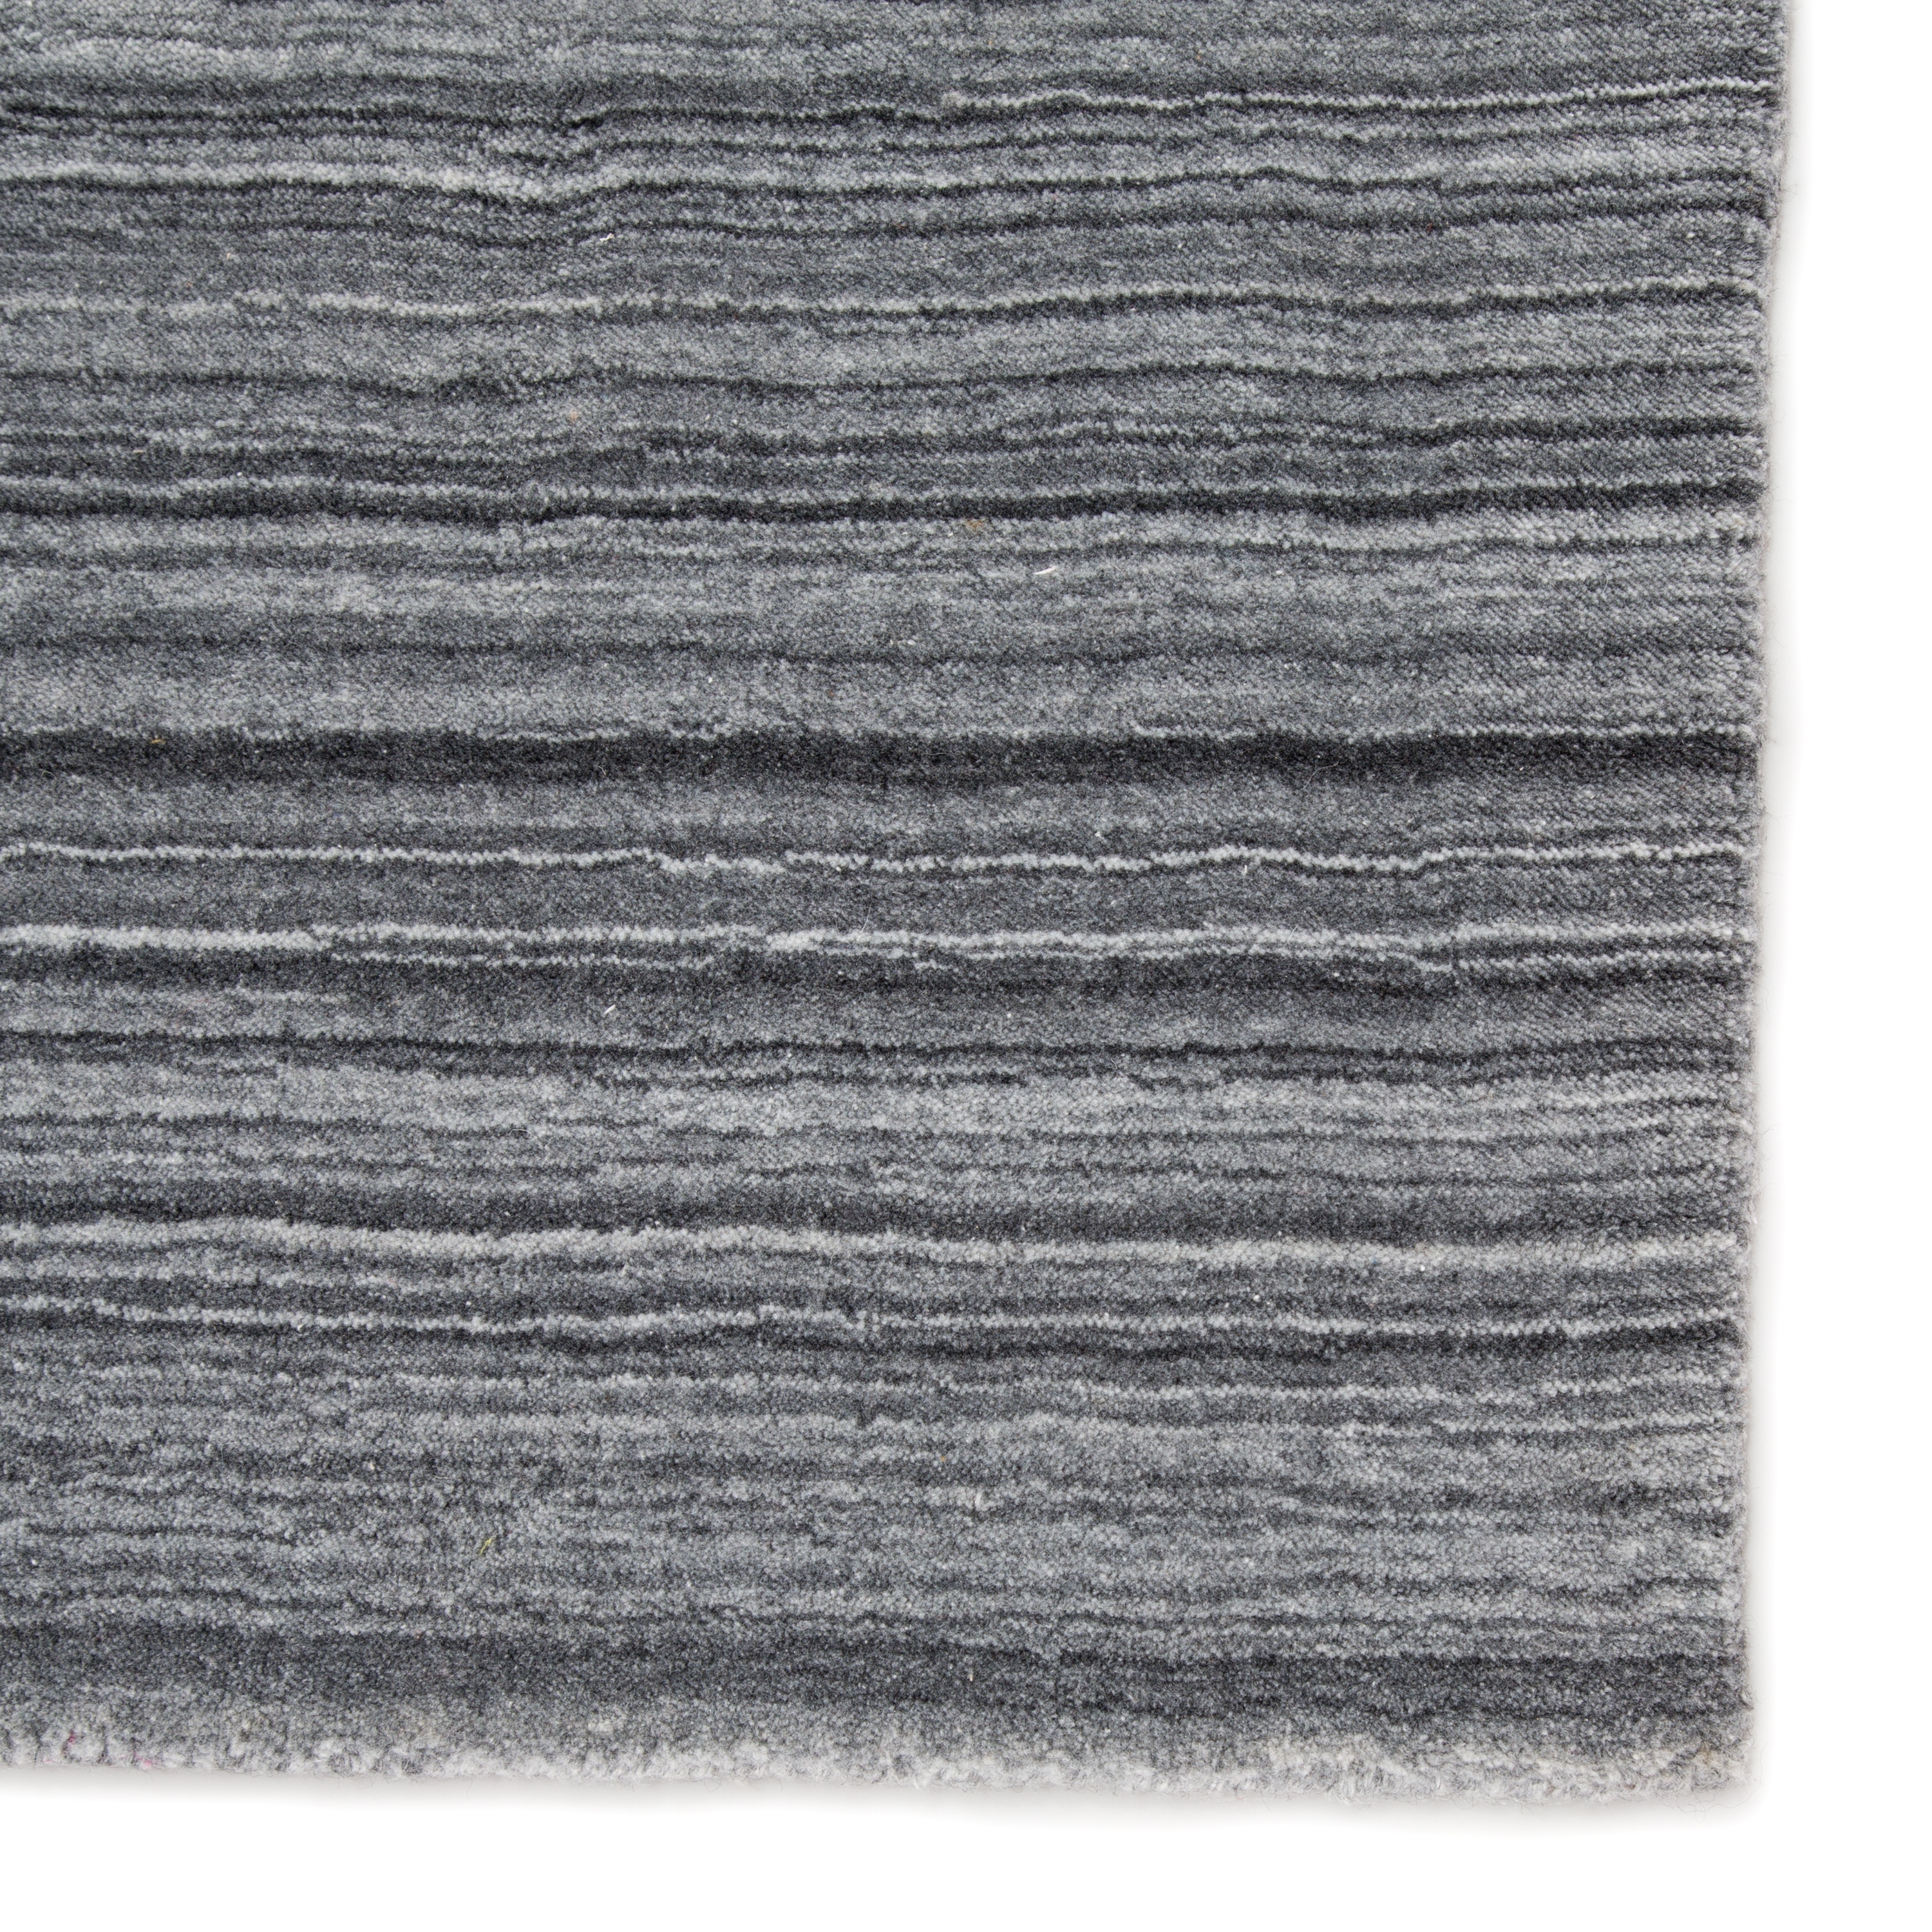 Tundra Handmade Solid Dark Gray/ Silver Area Rug (9'X12') - Image 3